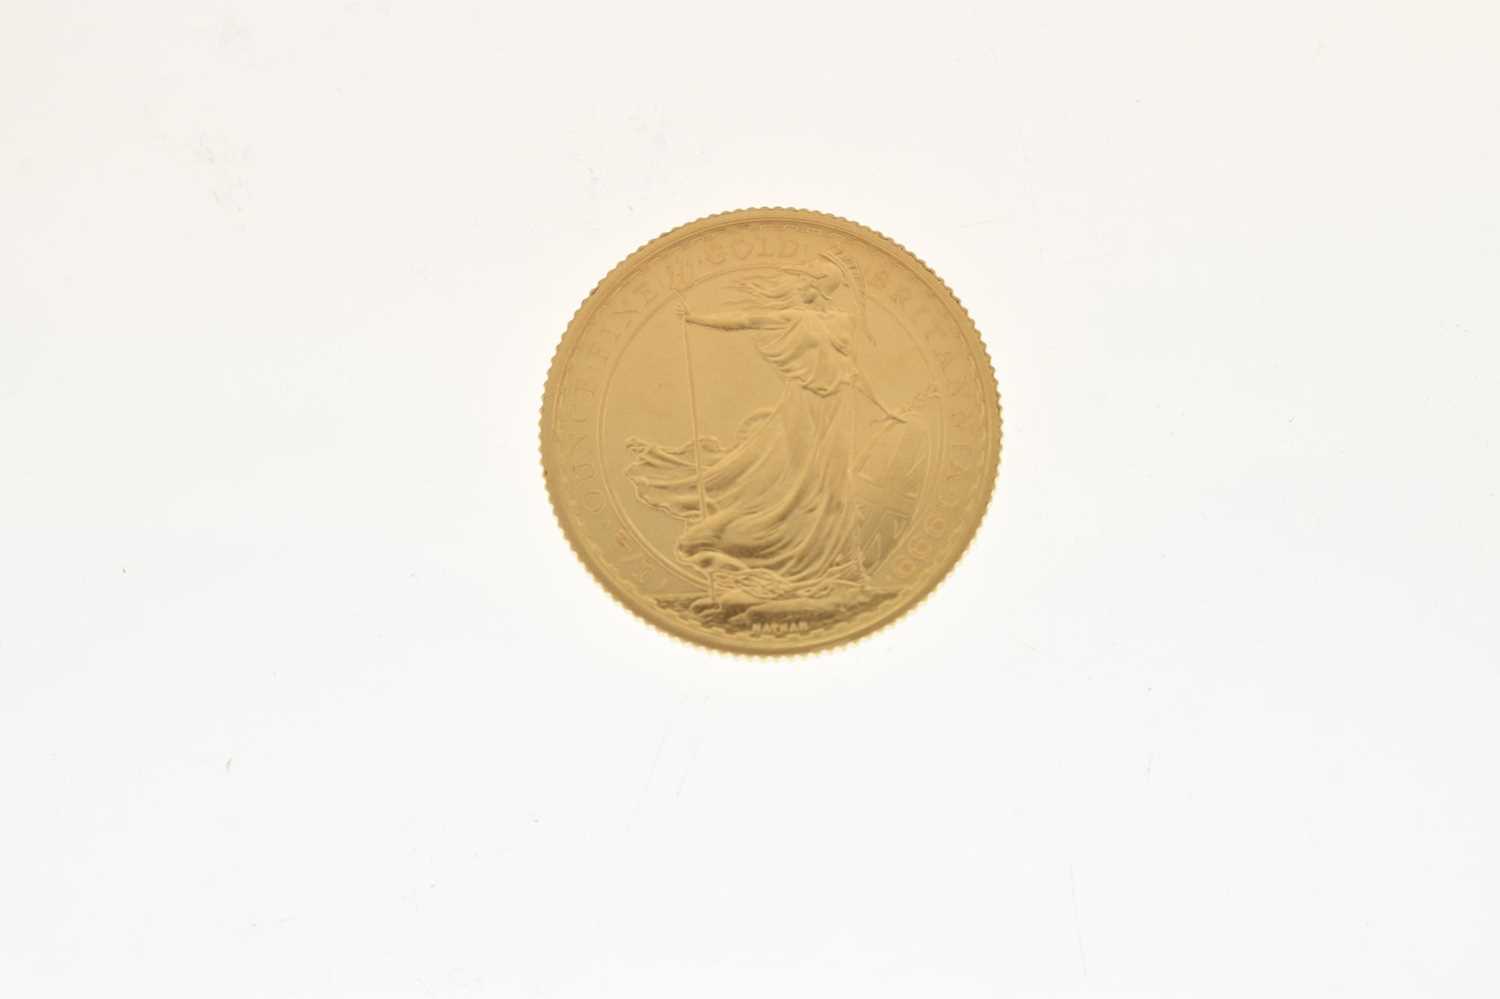 1/4oz Twenty-Five Pound Fine Gold Britannia Coin, 1999 - Image 5 of 5